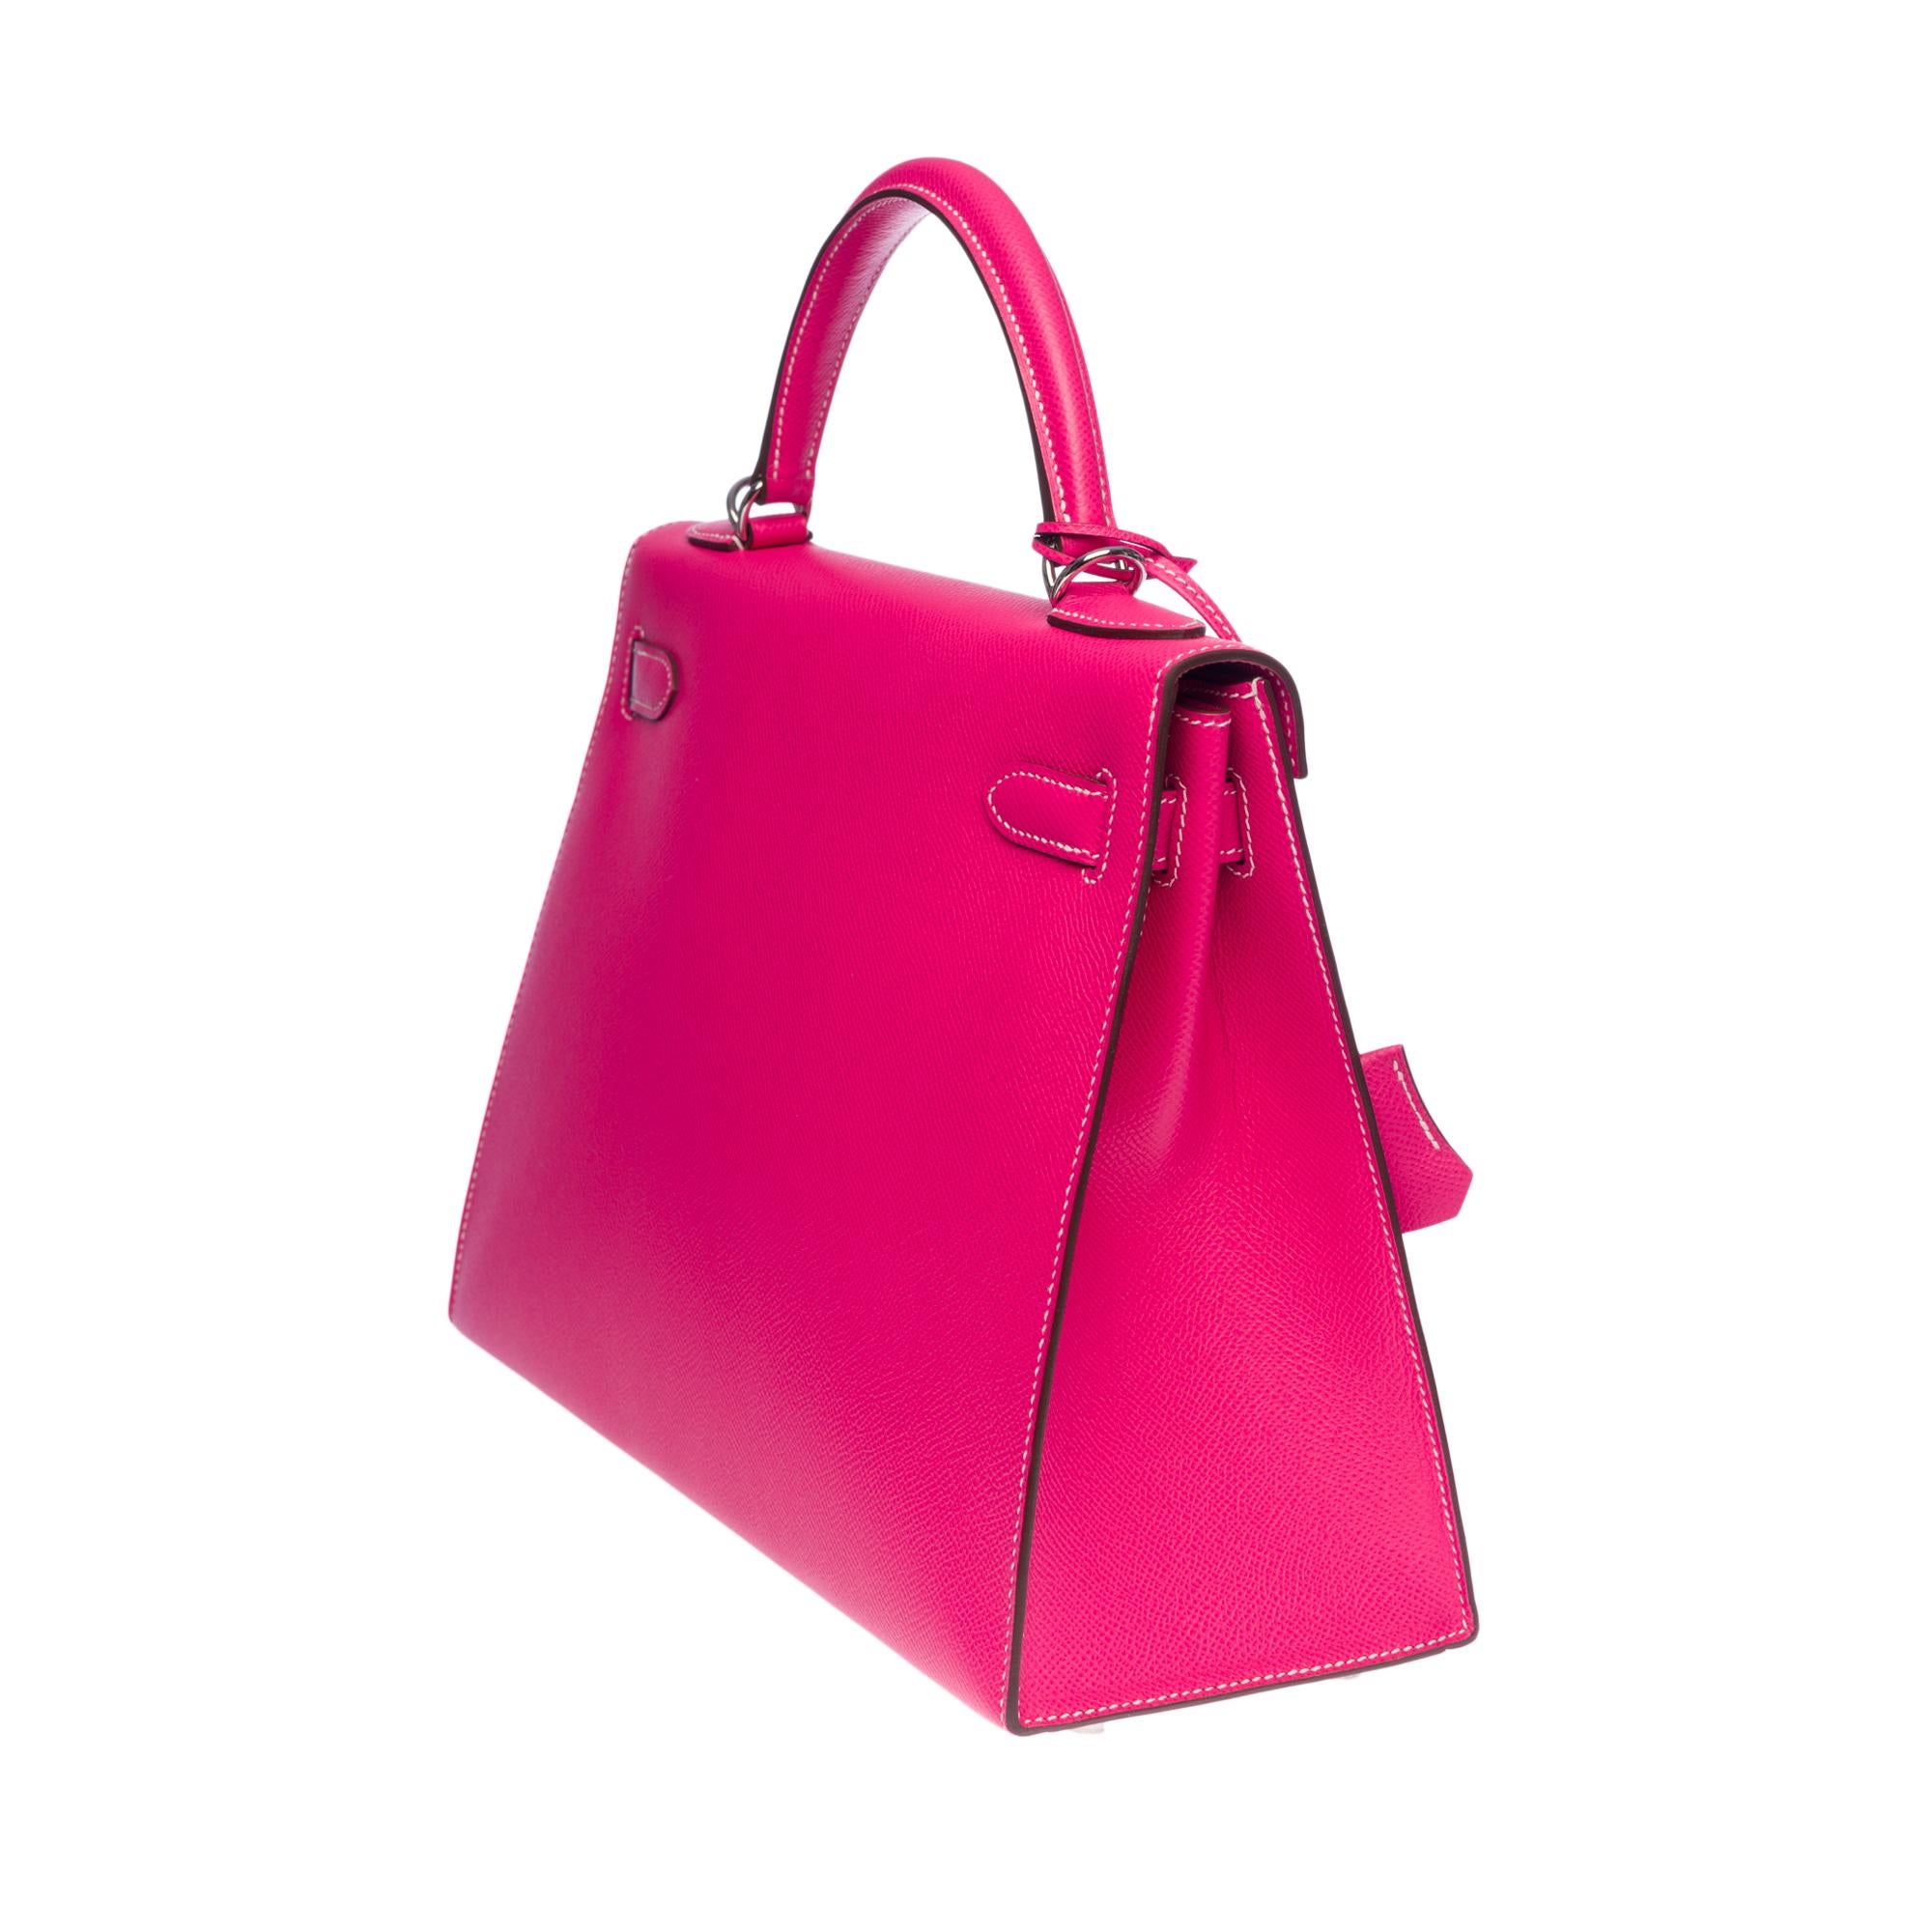 Women's Hermès Kelly 32 sellier handbag strap in Rose lipstick epsom leather, SHW